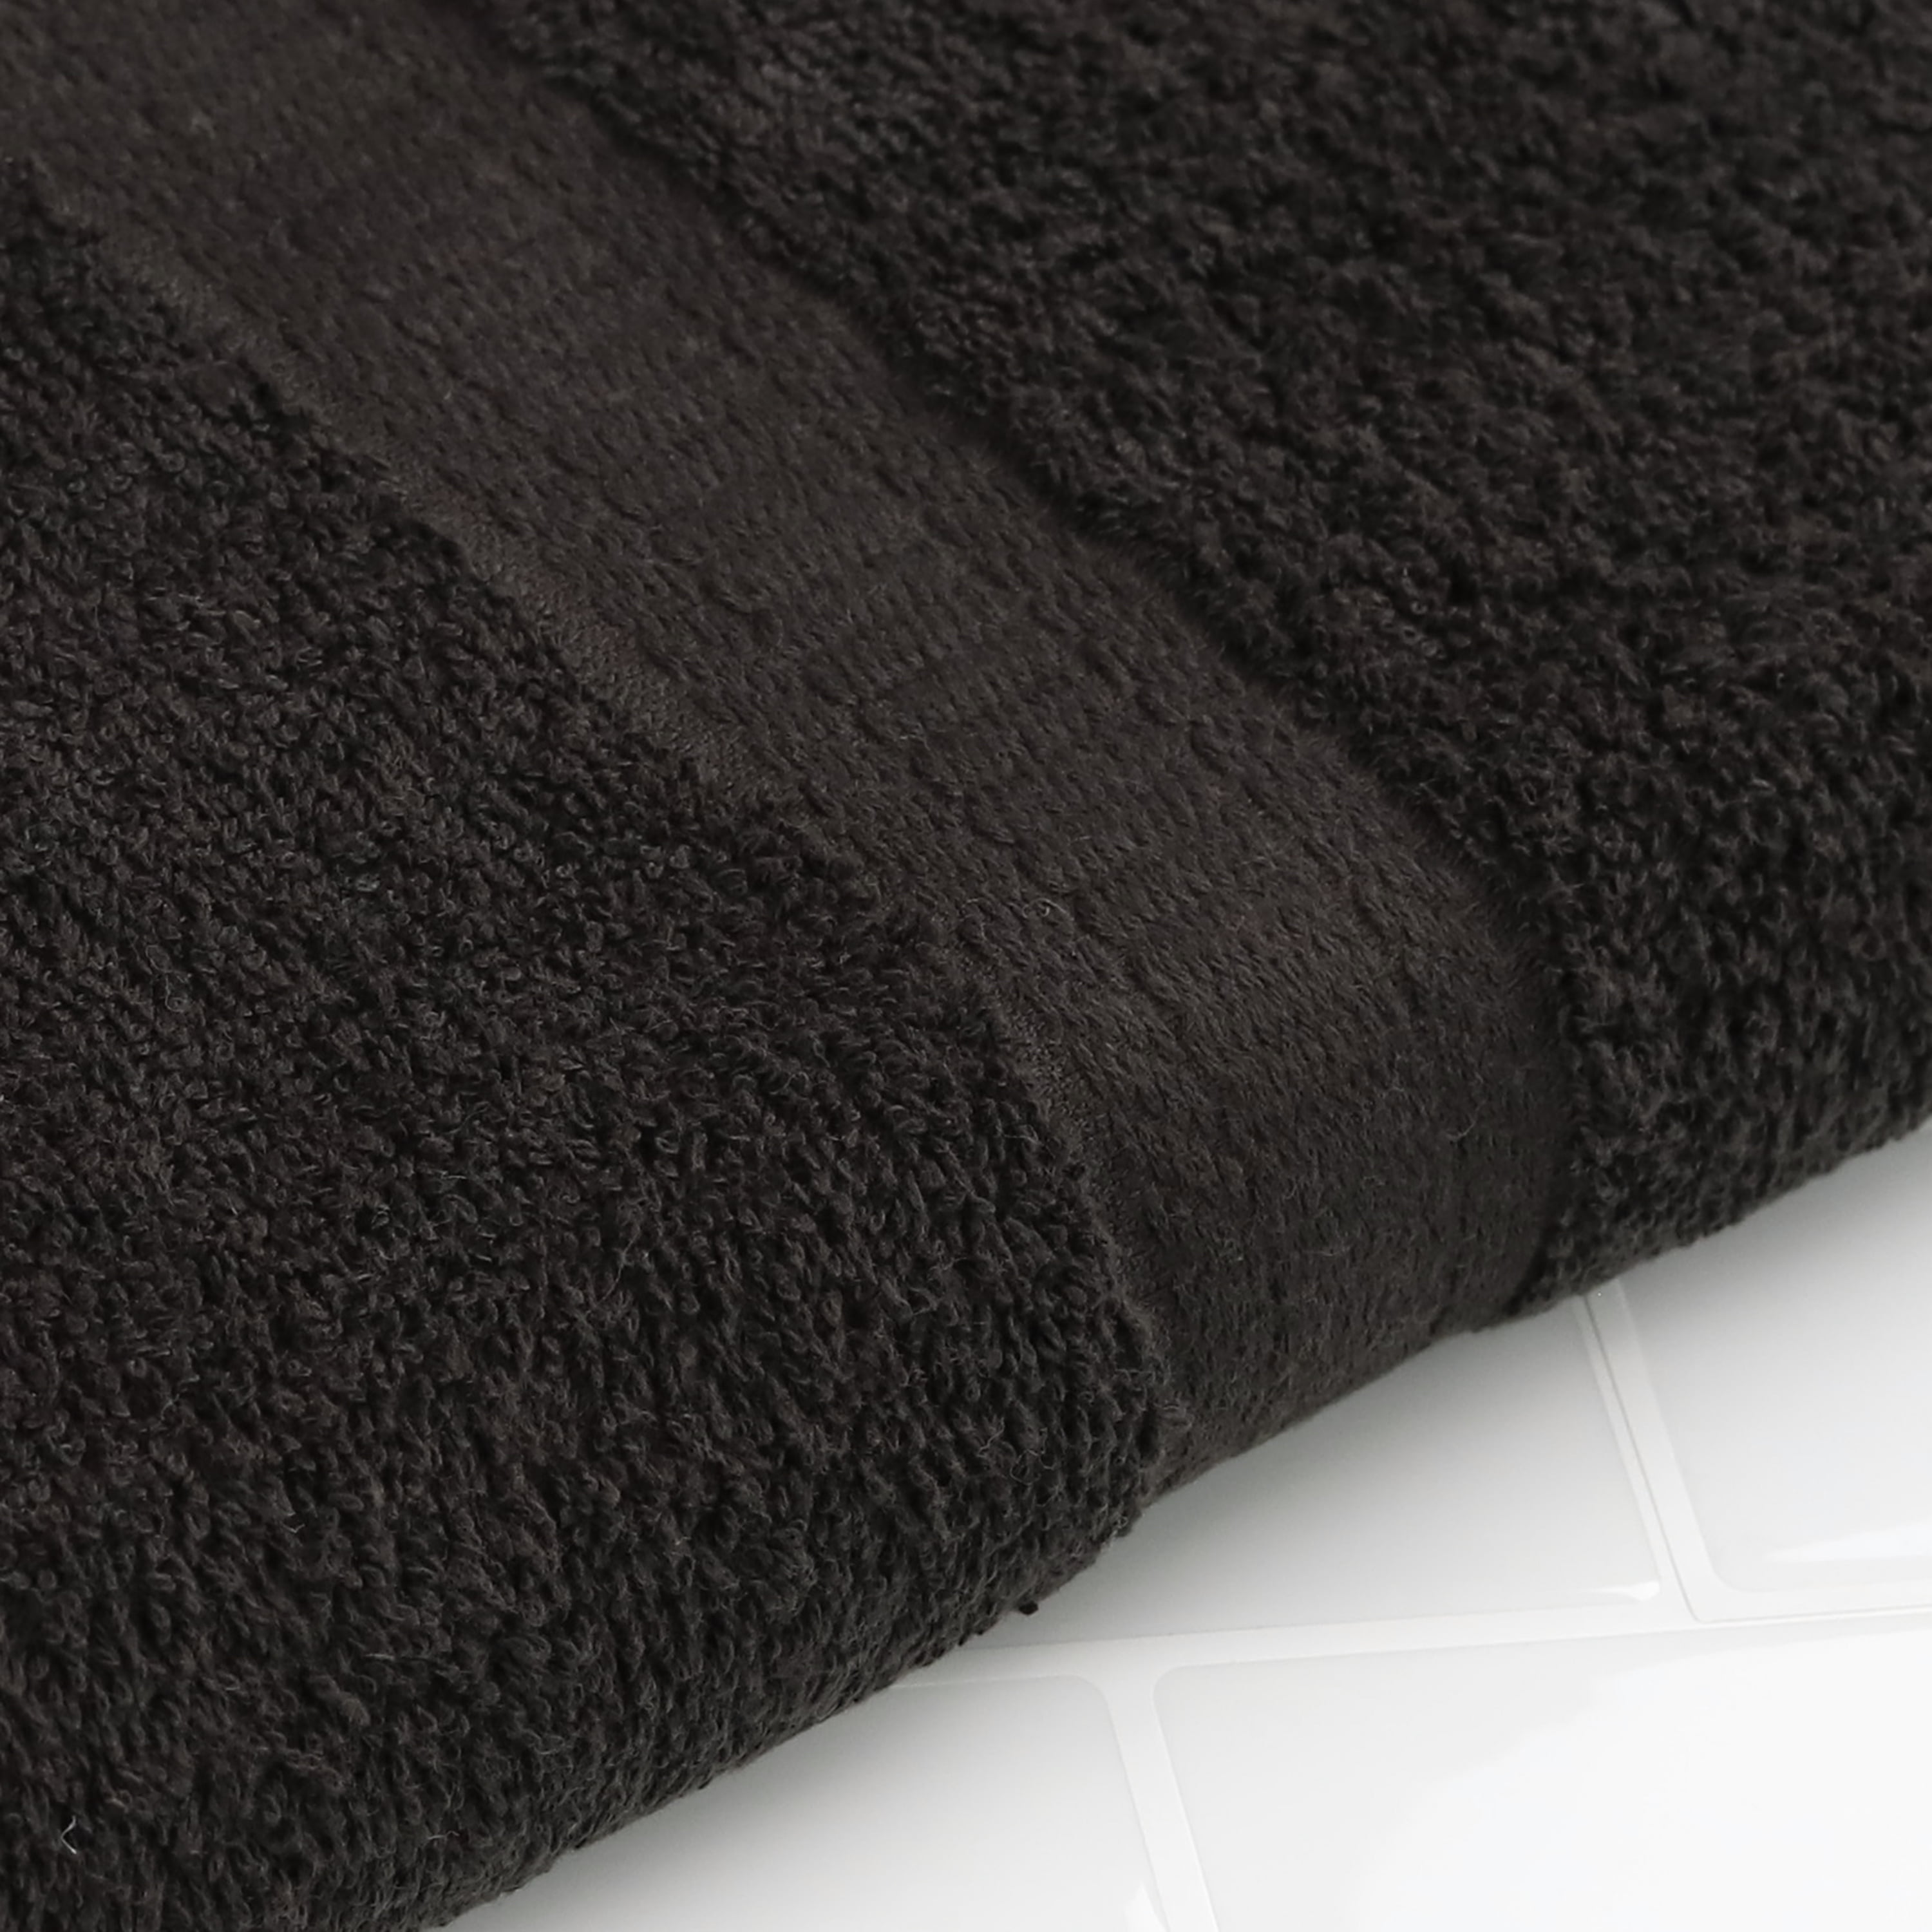 senya Black White Flower Hand Towel Ultra Soft Luxury Towels for Bathroom  30x15